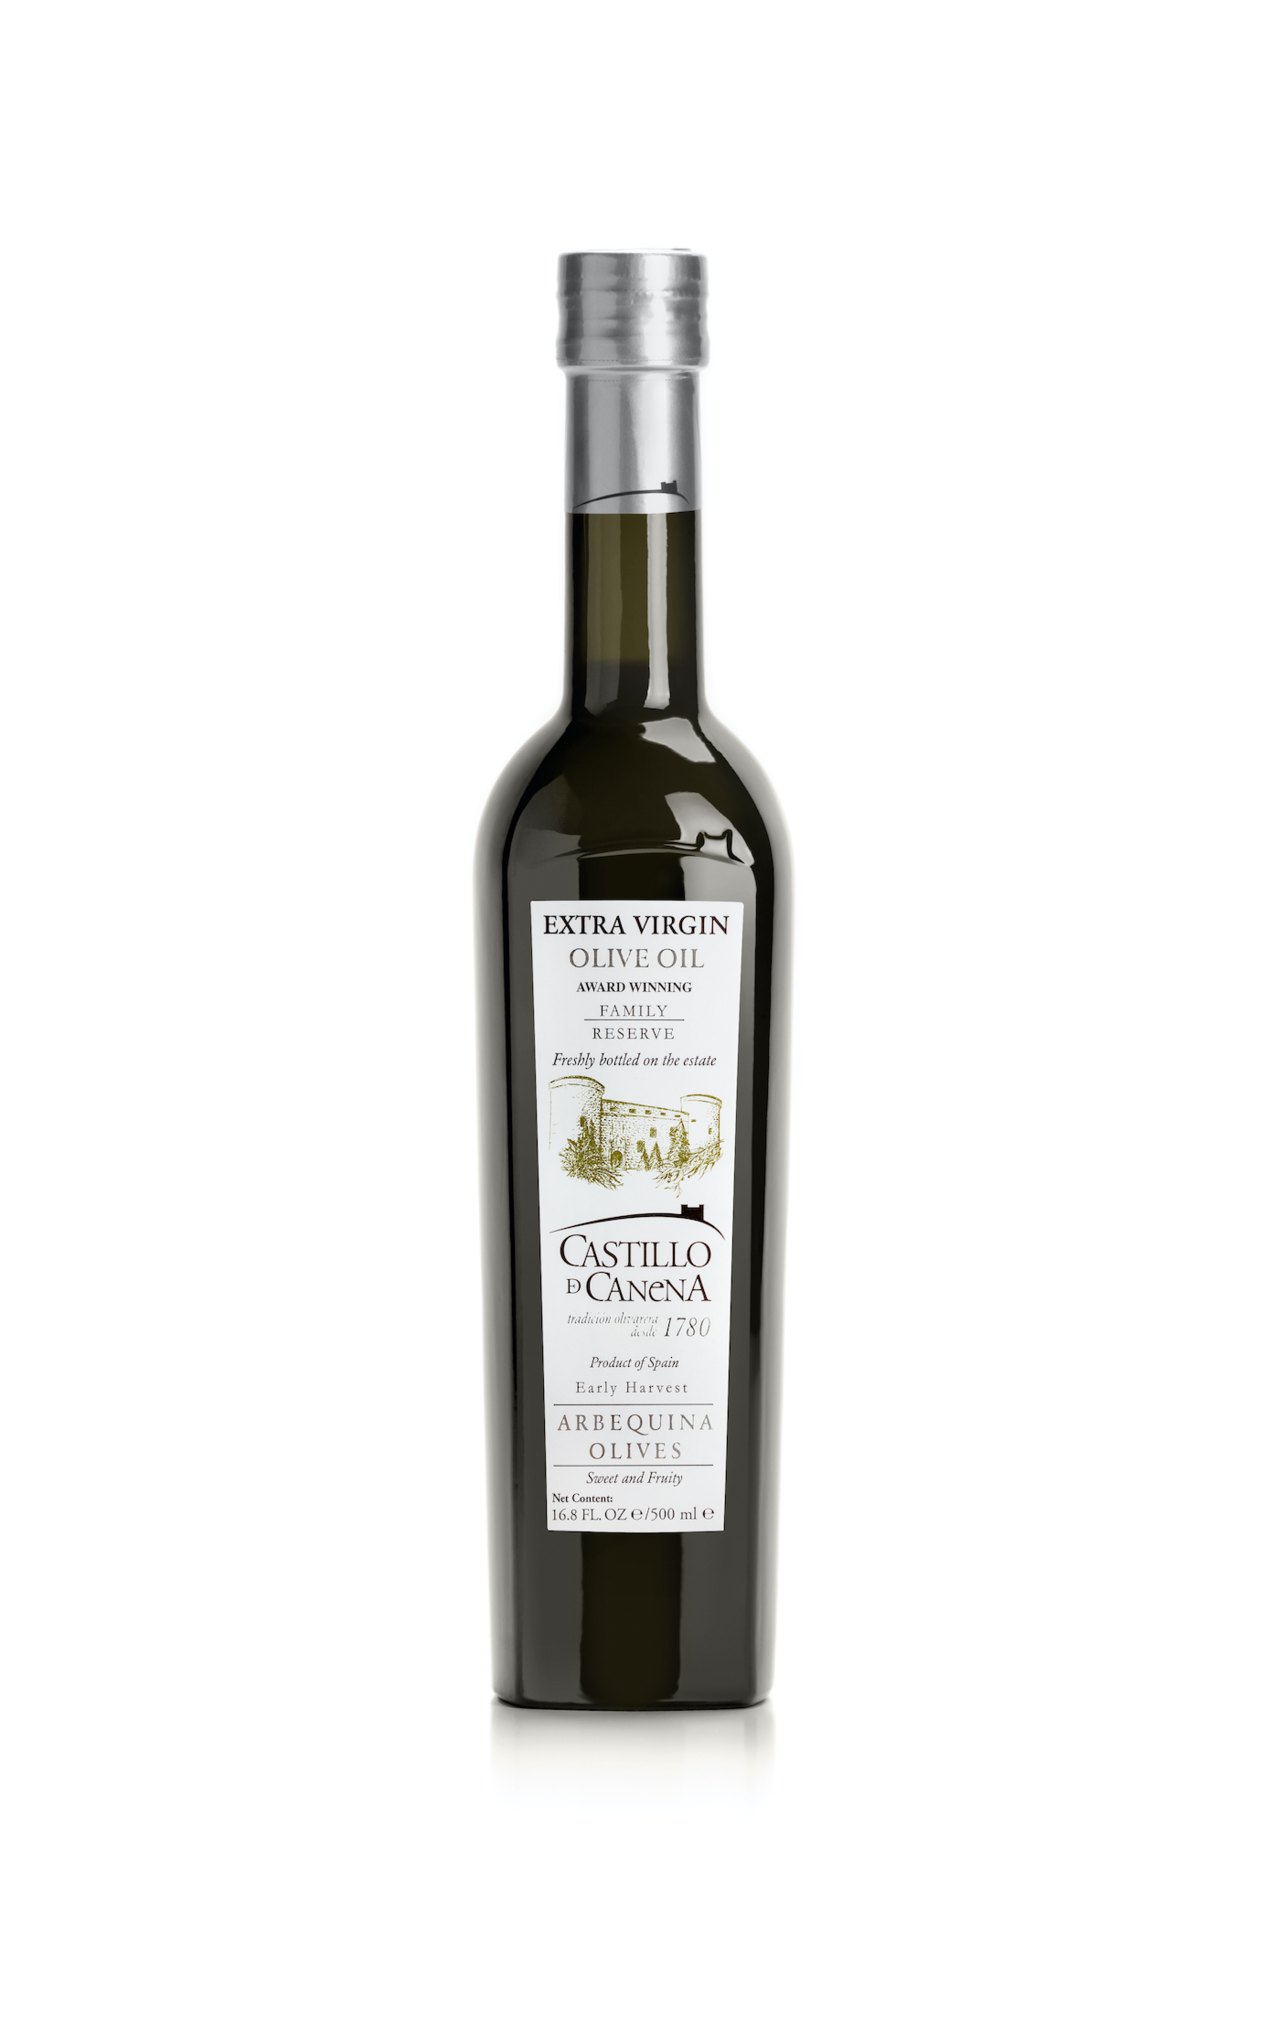 Castillo De Canena 卡內納城堡家族珍藏-阿貝金納品種特級初榨橄欖油 